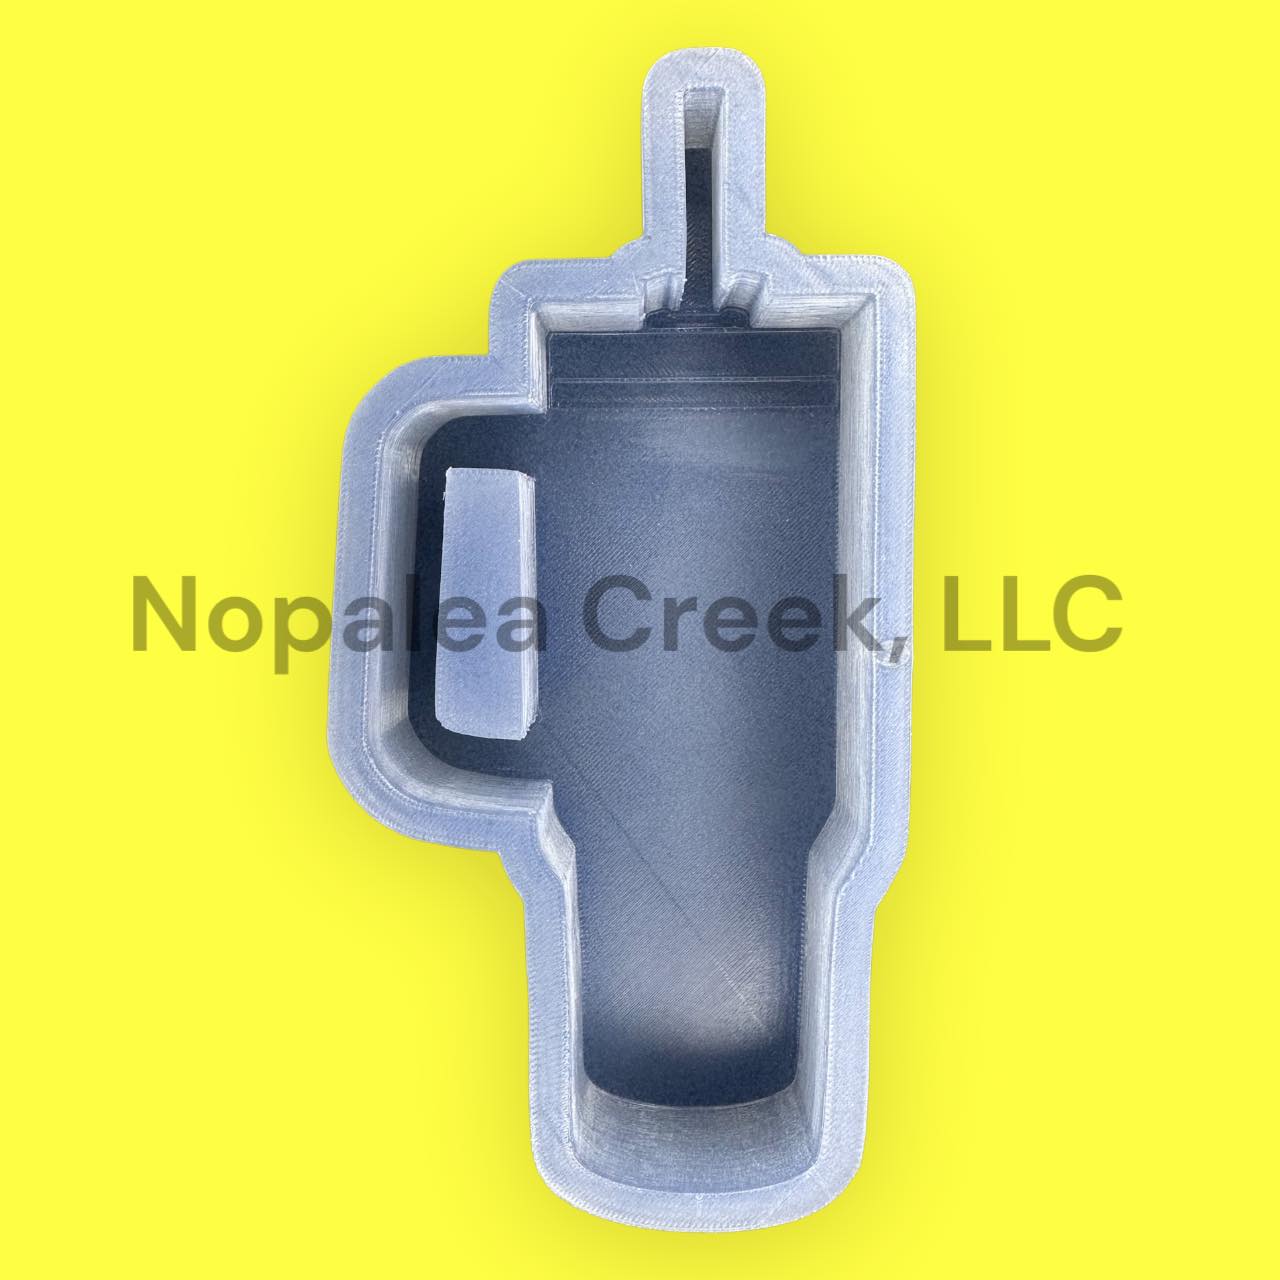 A302) Stanley Cup Silicone Mold – Nopalea Creek Mercantile